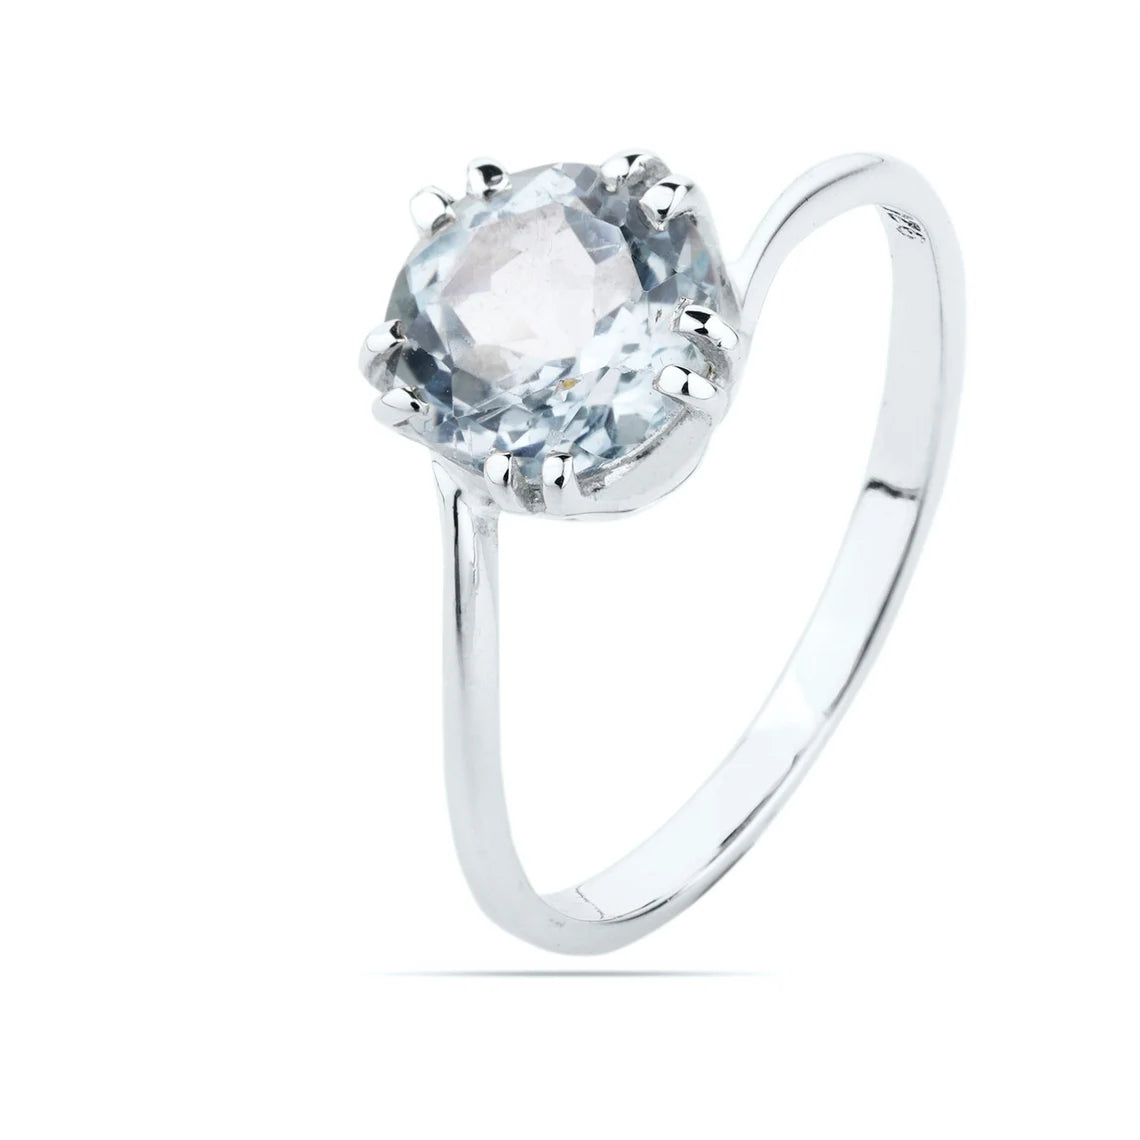 Blue Topaz Ring - Gemstone Ring - Sterling Silver Ring - Round Blue Topaz Ring - Prong Ring - Engagement Ring - Wedding Ring - Promise Ring